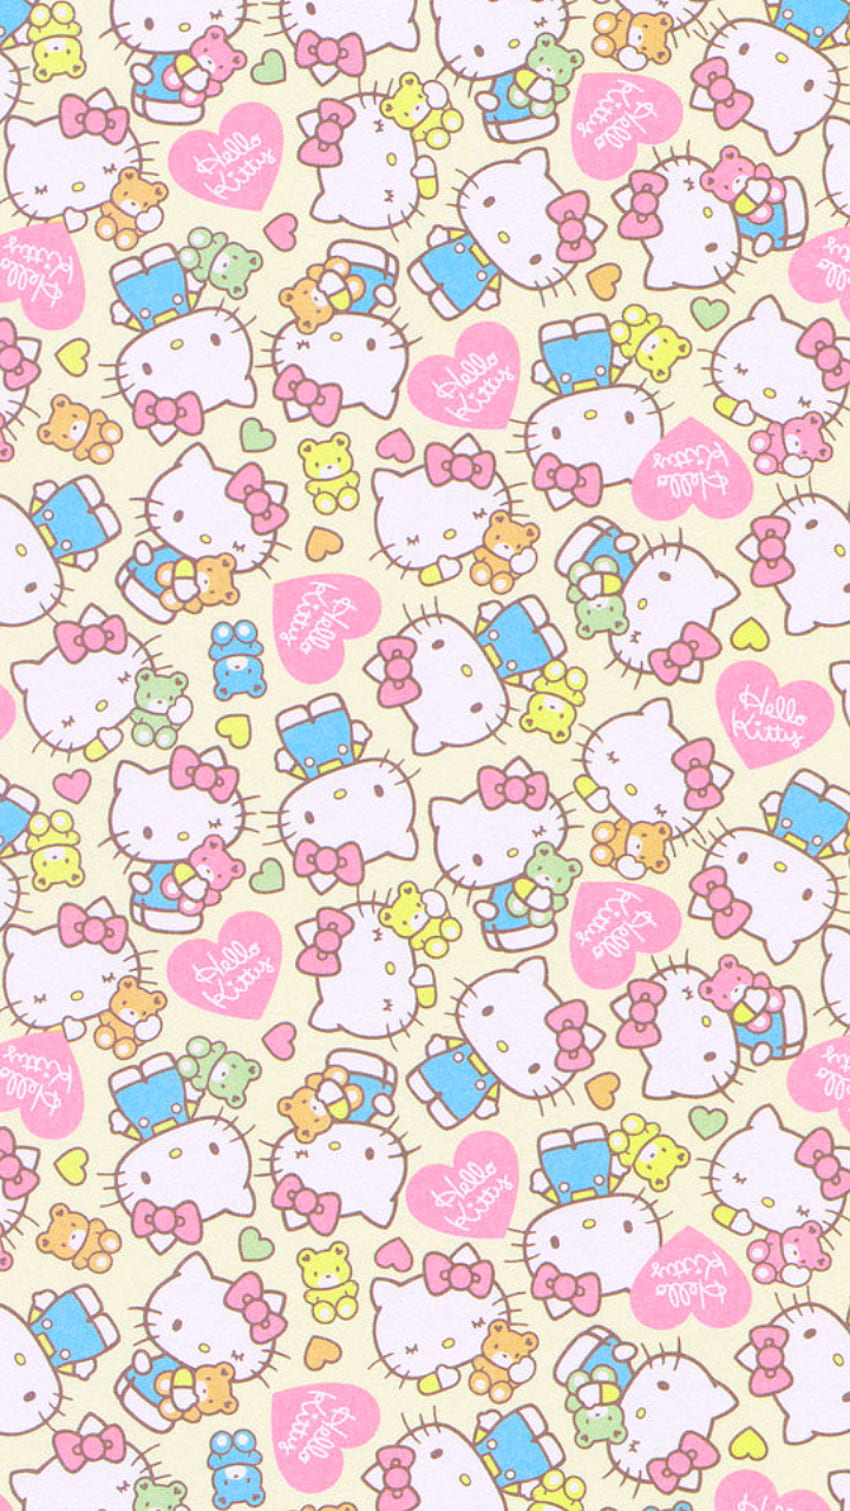 Hello kitty wallpaper background with cute cartoon characters - Sanrio, Hello Kitty